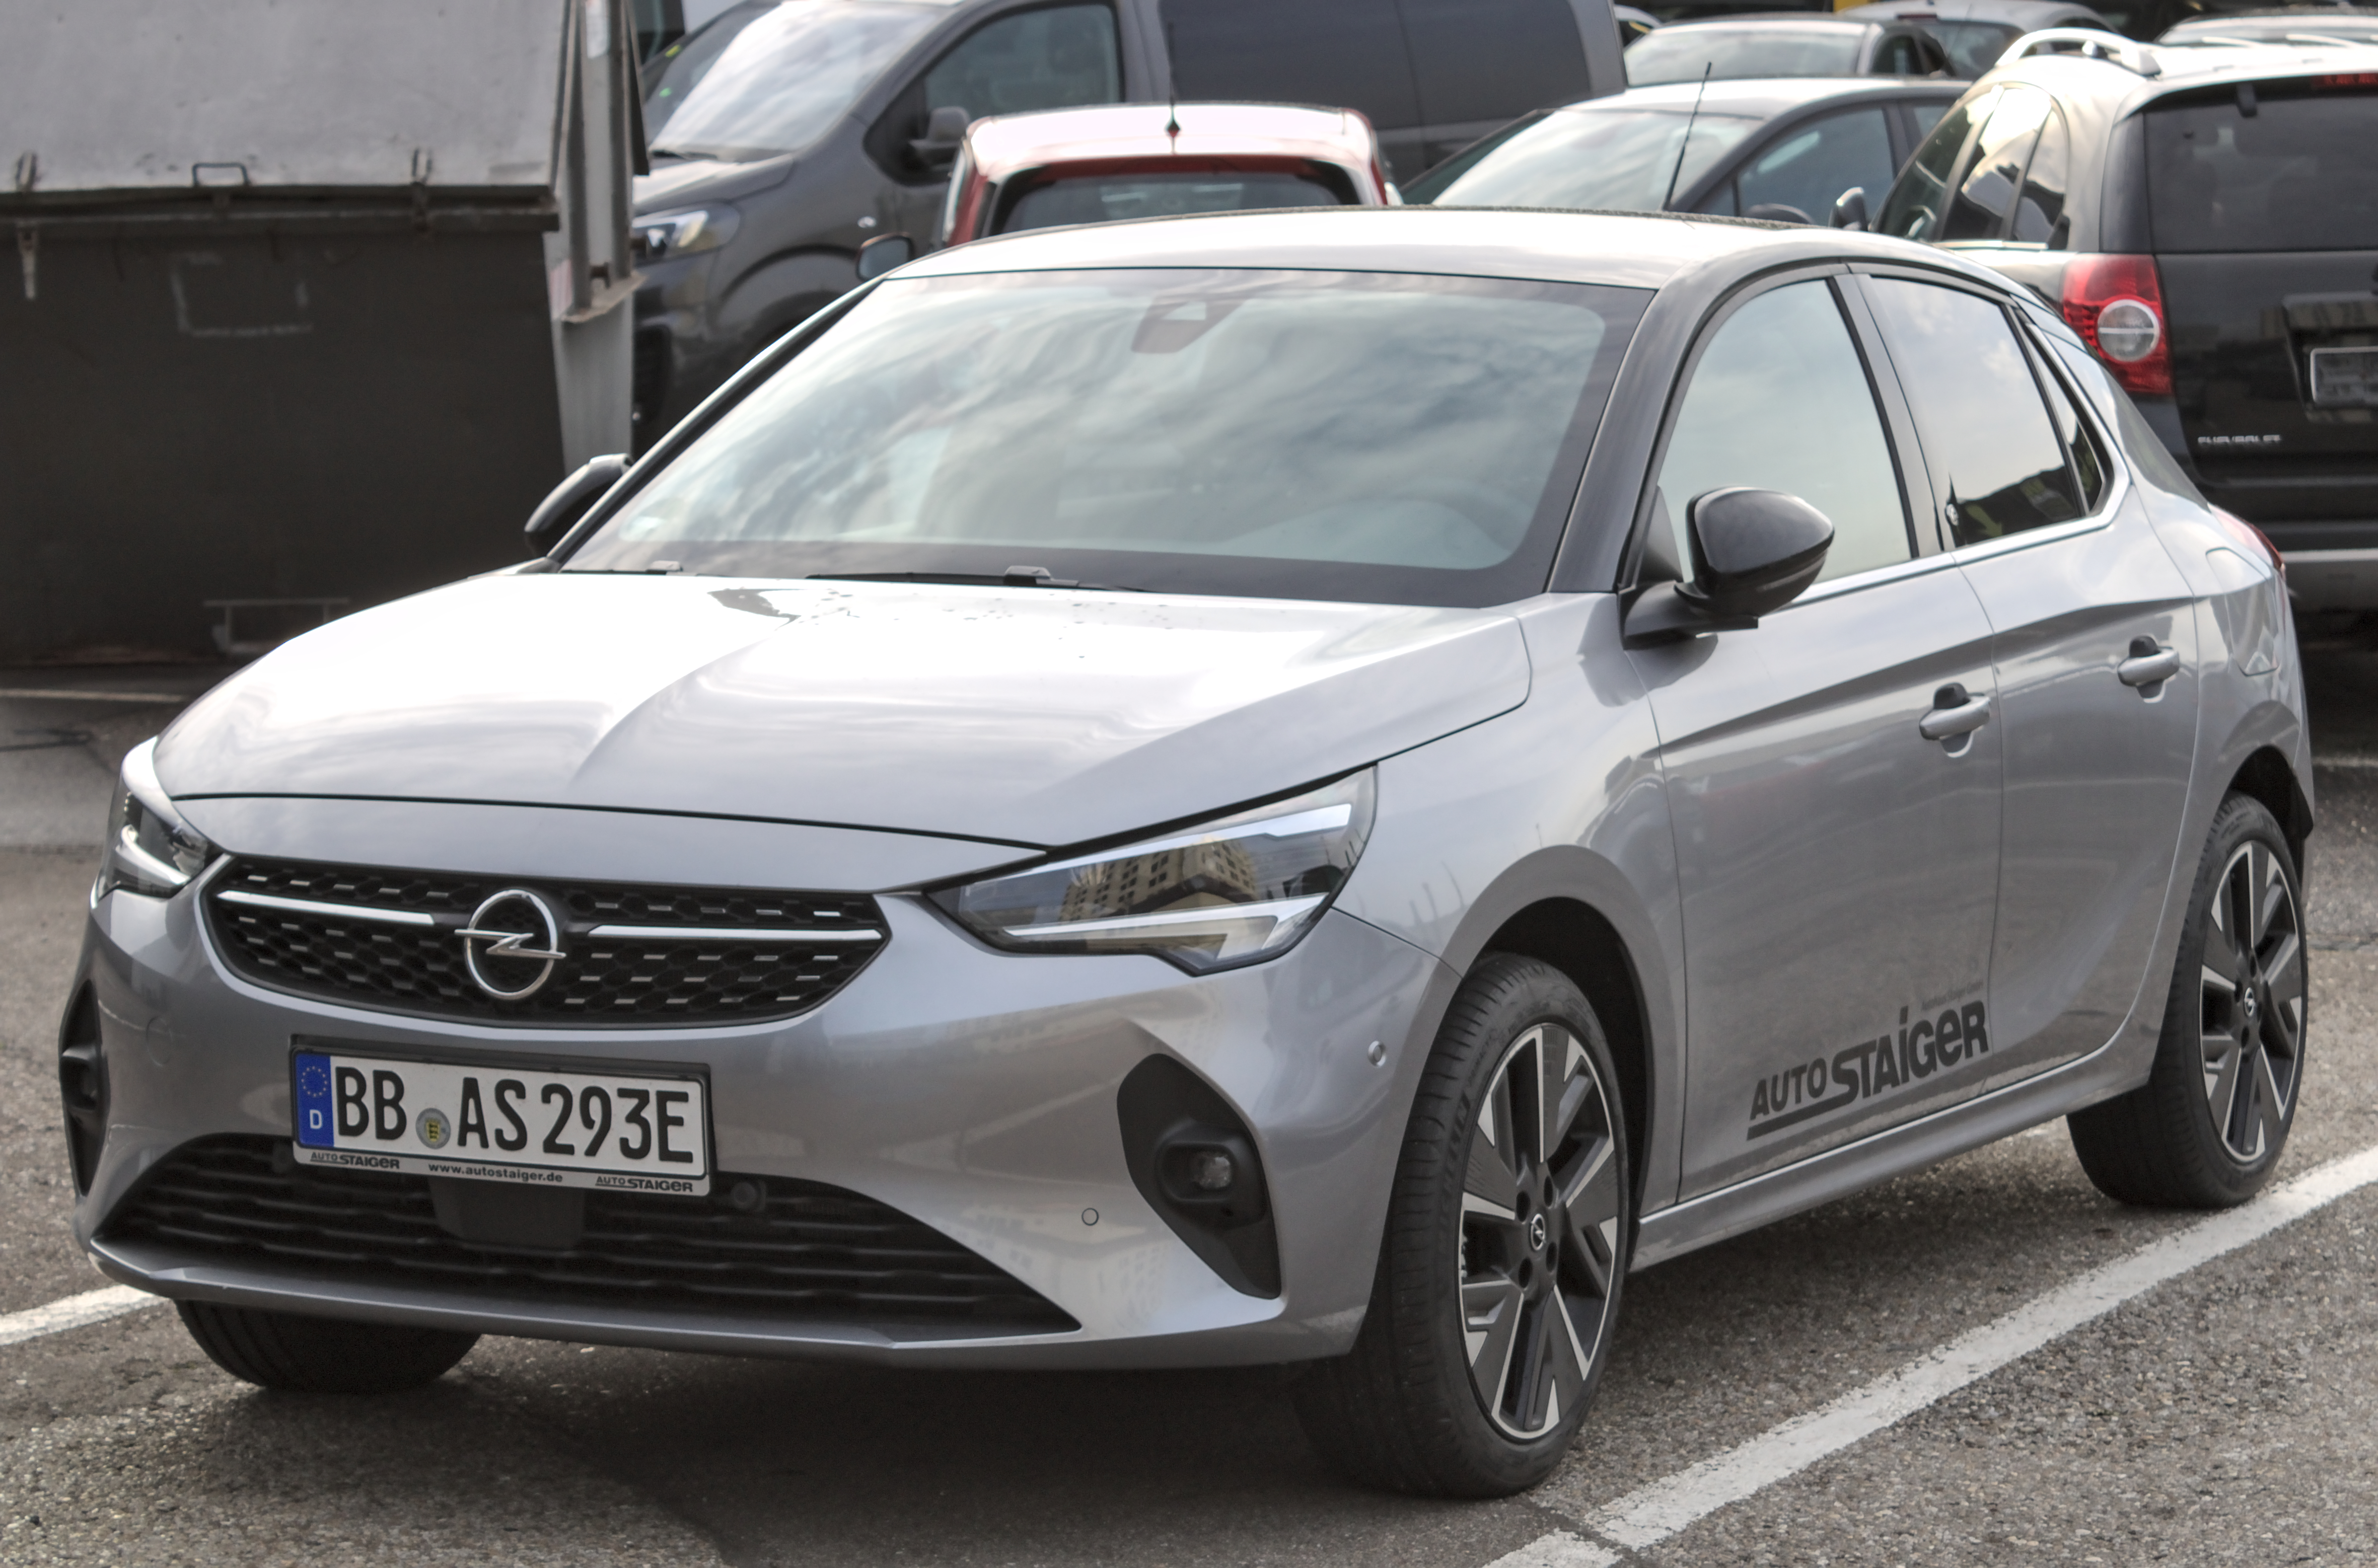 File:2020 Opel Corsa F.jpg - Wikimedia Commons